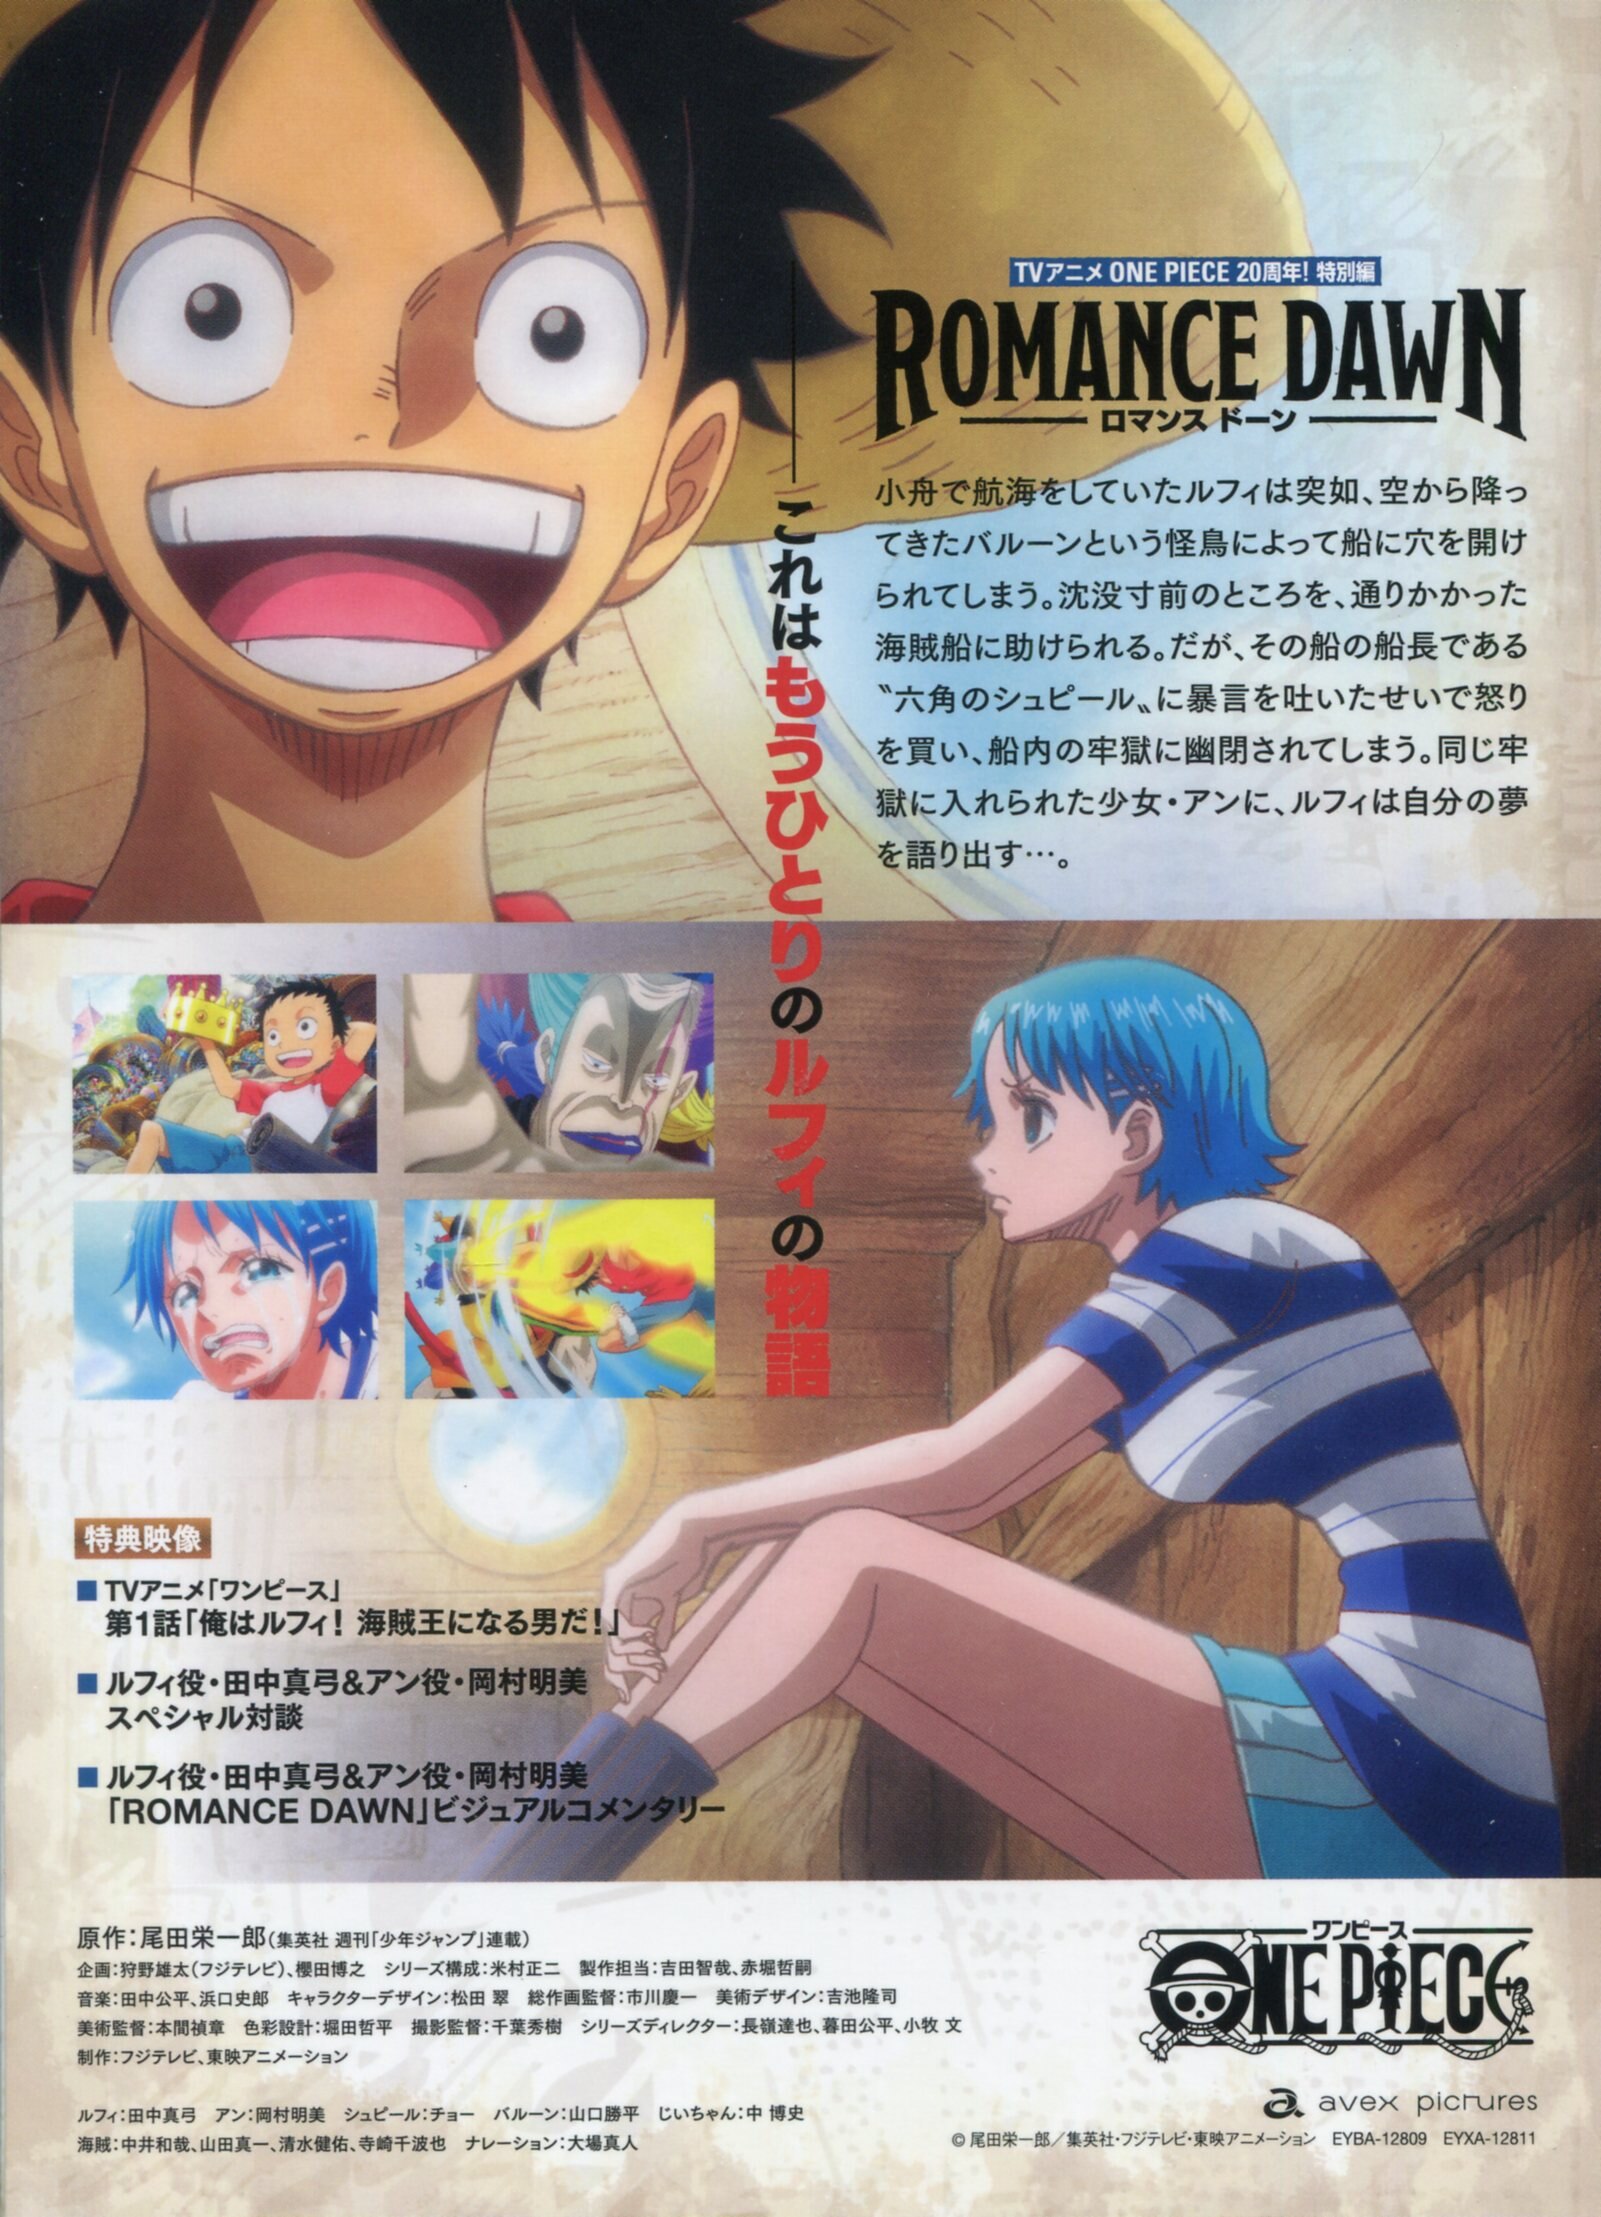 Anime Dvd Romance Dawn First Edition Limited Edition Mandarake Online Shop